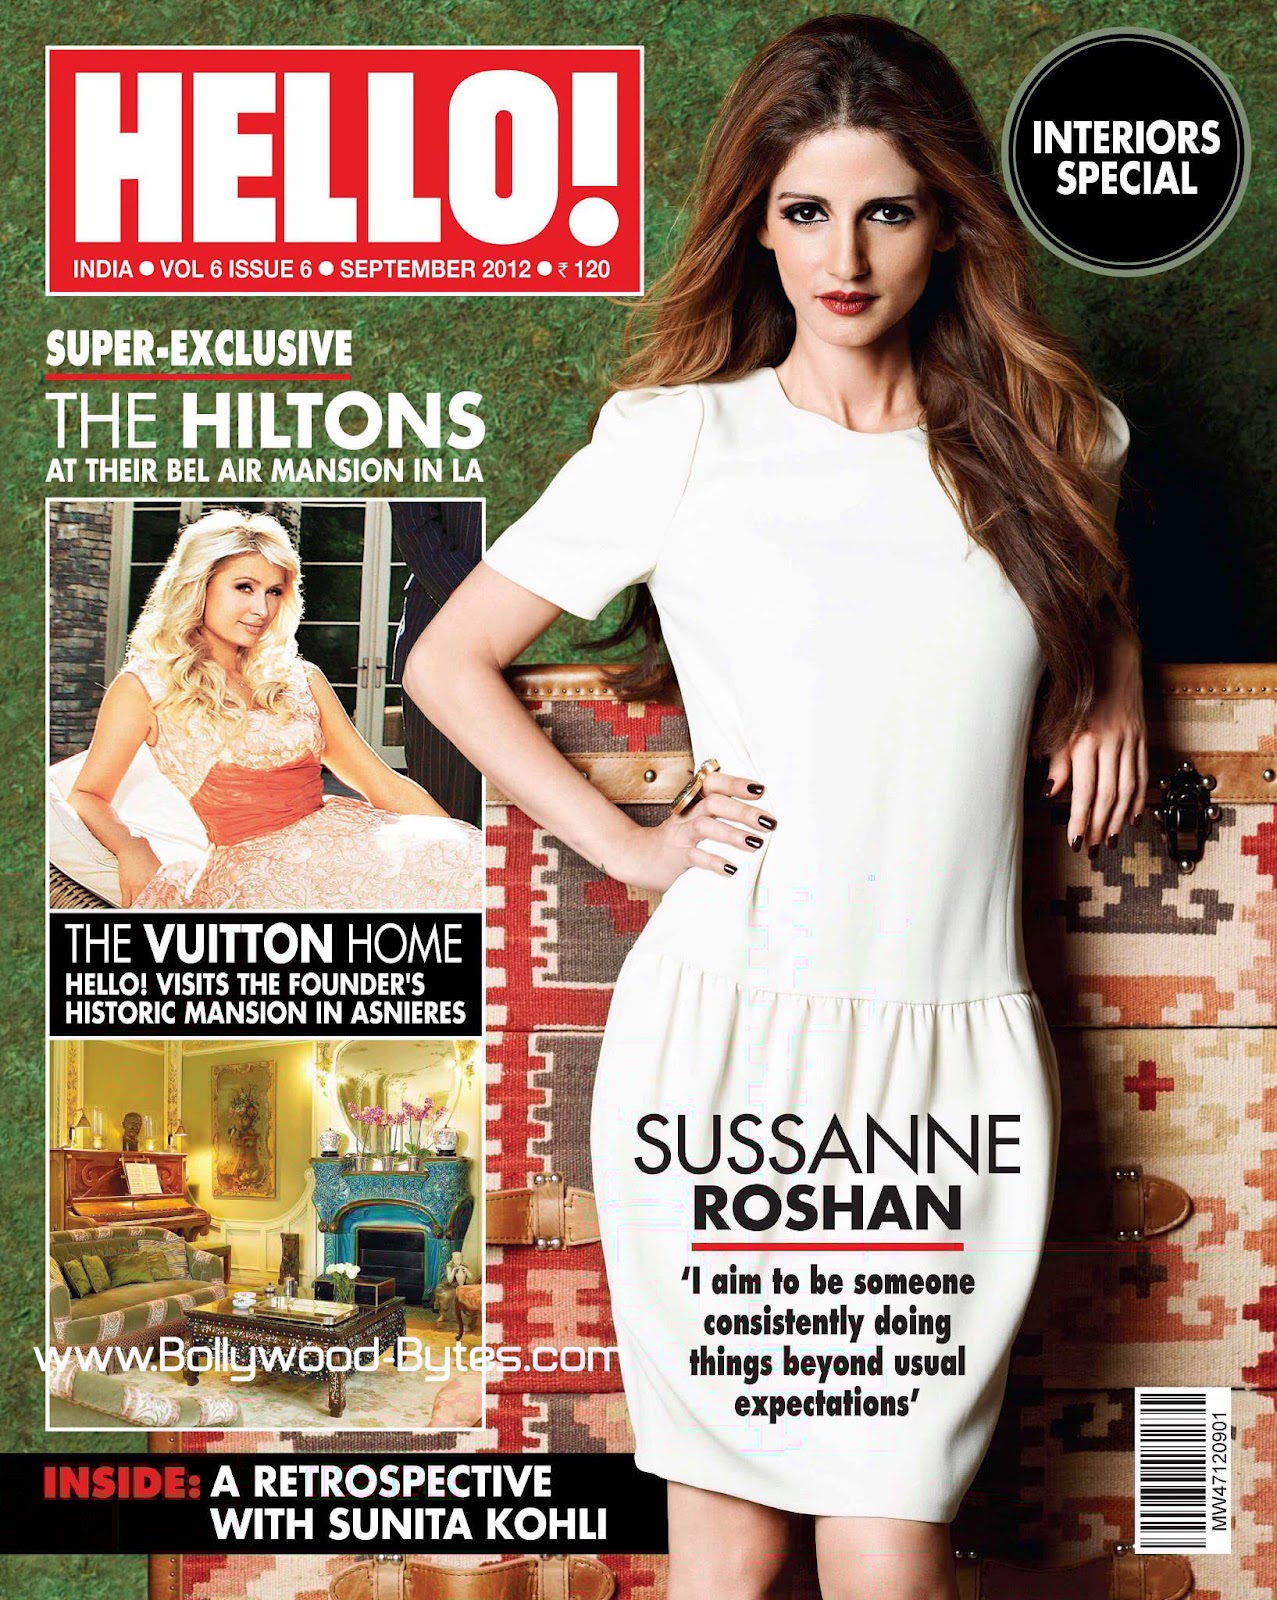 https://blogger.googleusercontent.com/img/b/R29vZ2xl/AVvXsEgP8ihpnSUdJJ8dNscS4elQ6EY-zxRQohyo95mcSfV5Vqc6tePegYtN0RRyfcYKuSinA0jXxbh2FpZ2L2Z87XnwtohDXpFBbwqqBhTm30Yf1PvRlZPo1UIUovShtJtry_xZSmZhcSTX7YkW/s1600/Beautiful-Sussanne-Roshan-On-the-cover-Hello!-India-Magazine-September-2012.jpg